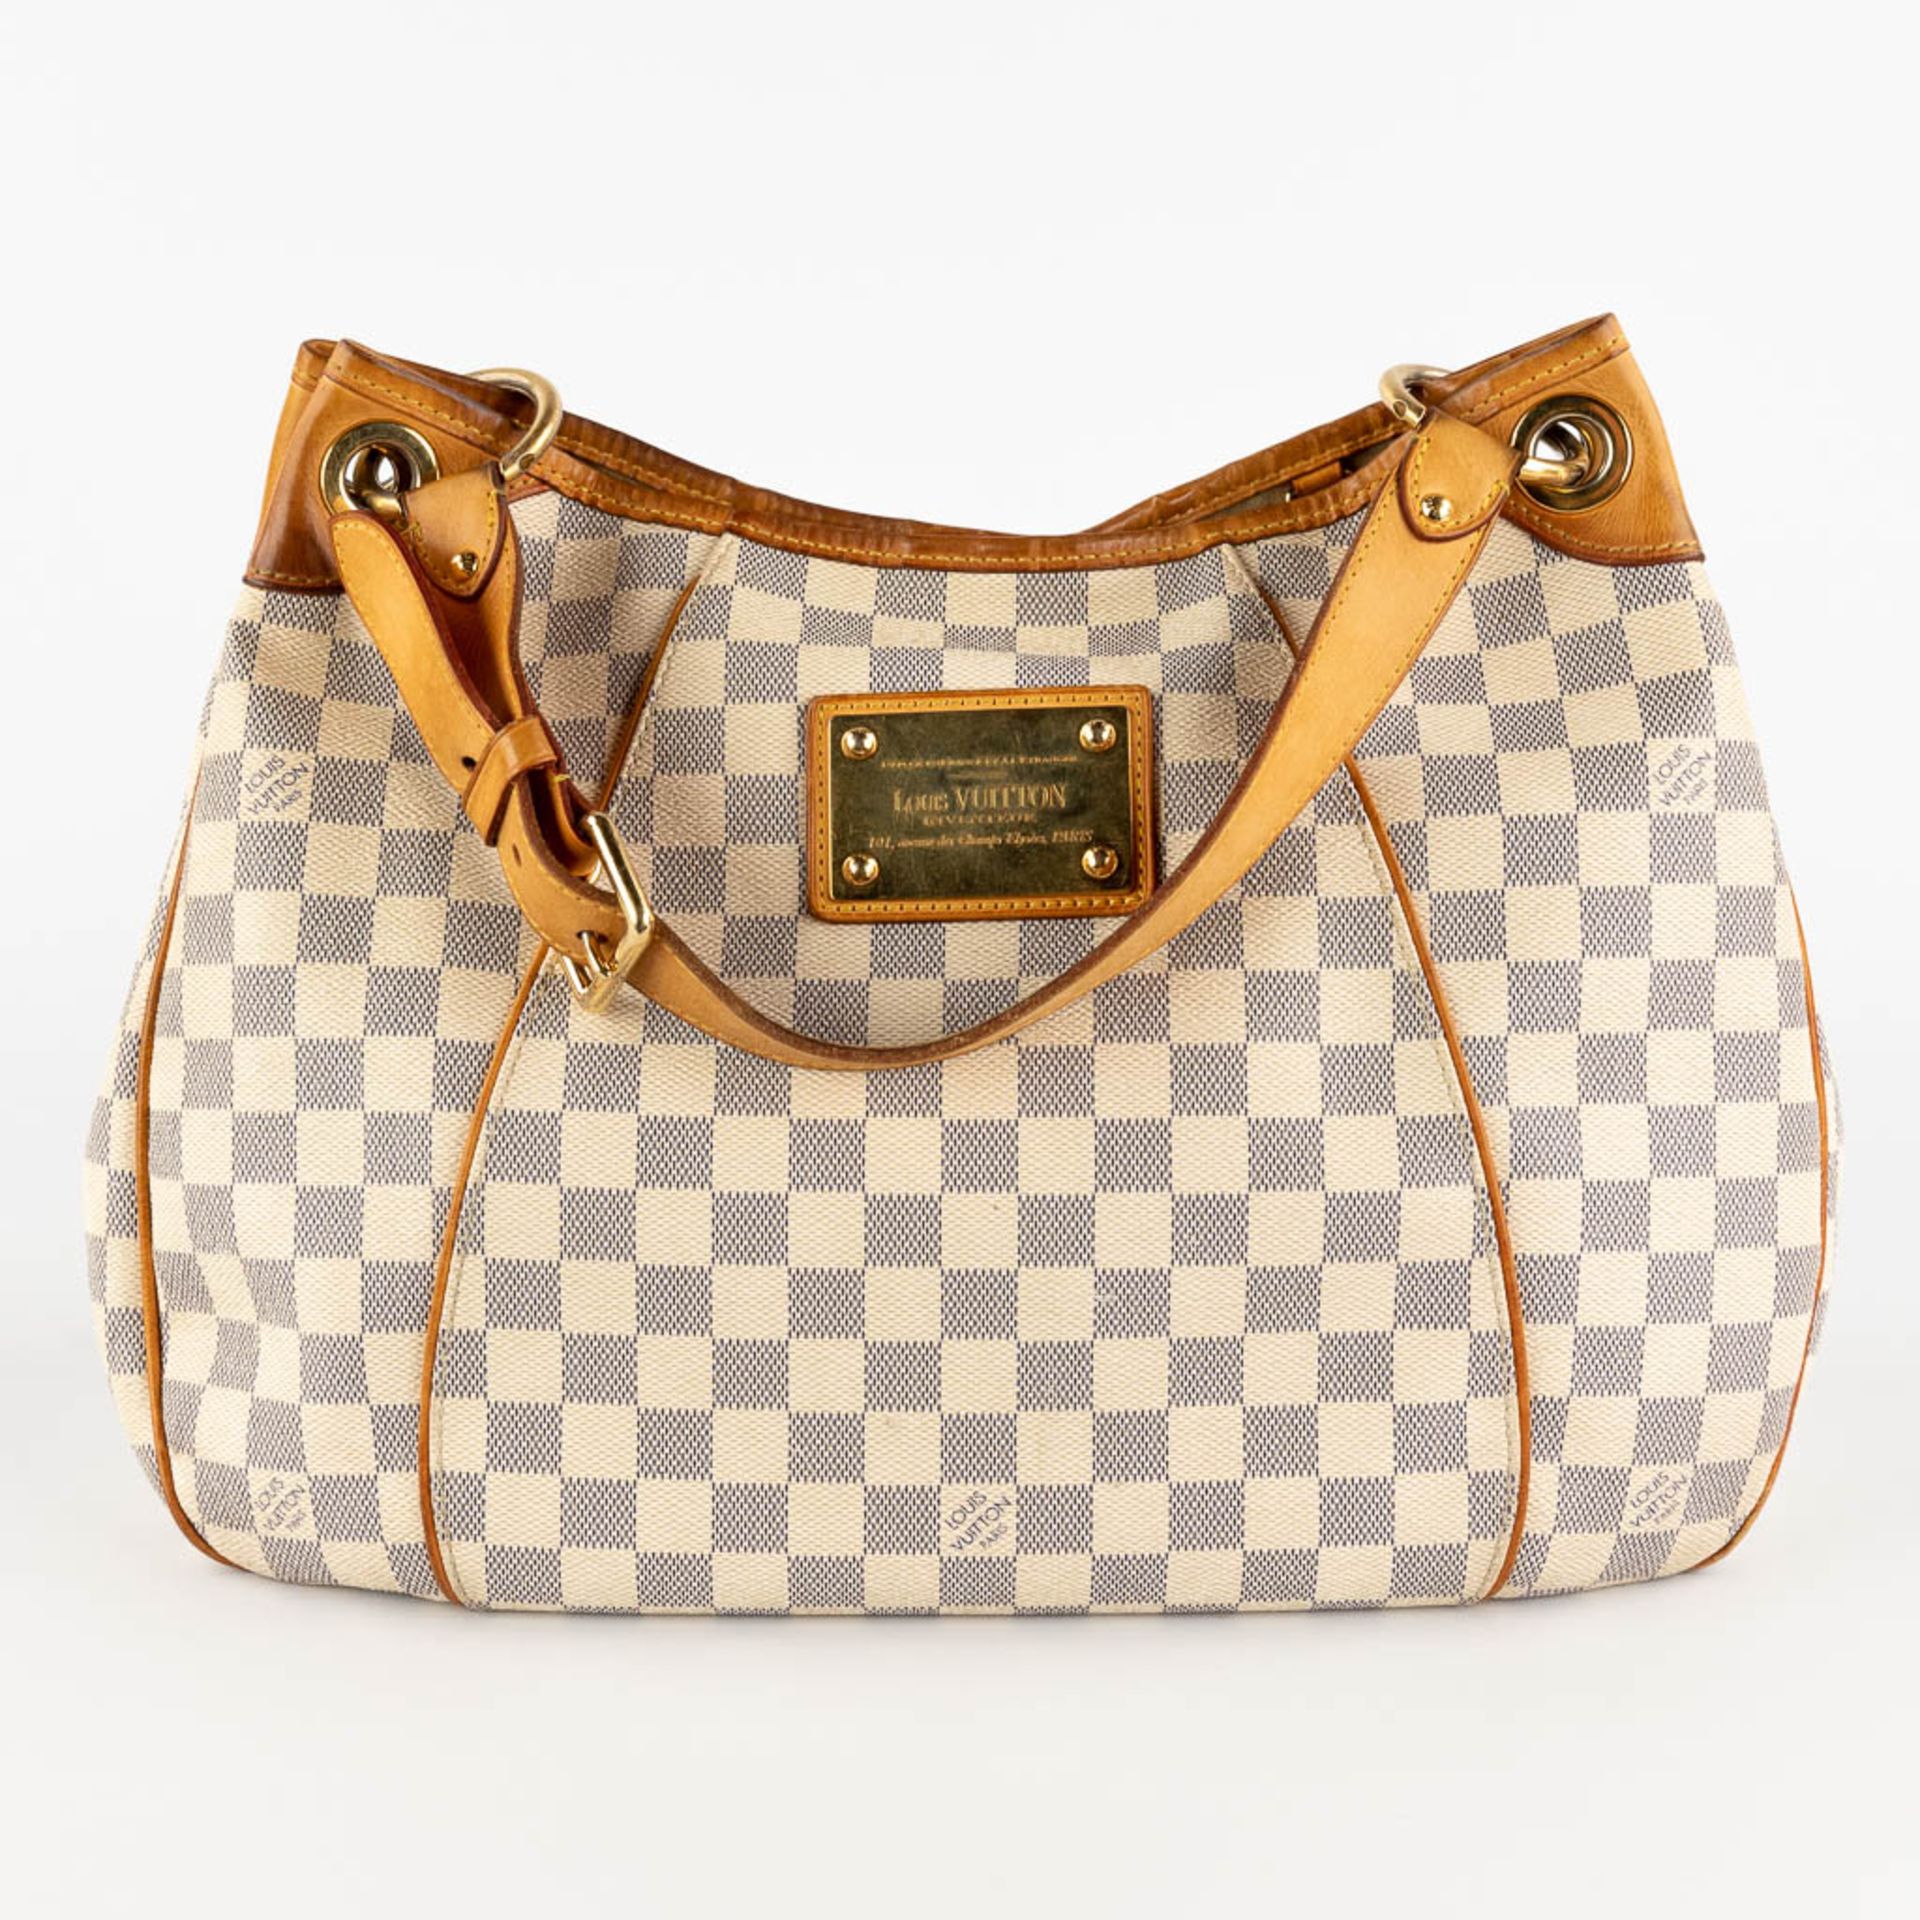 Louis Vuitton, Galleria, a handbag made of Damier Azur. (W:39 x H:30 cm) - Bild 4 aus 18